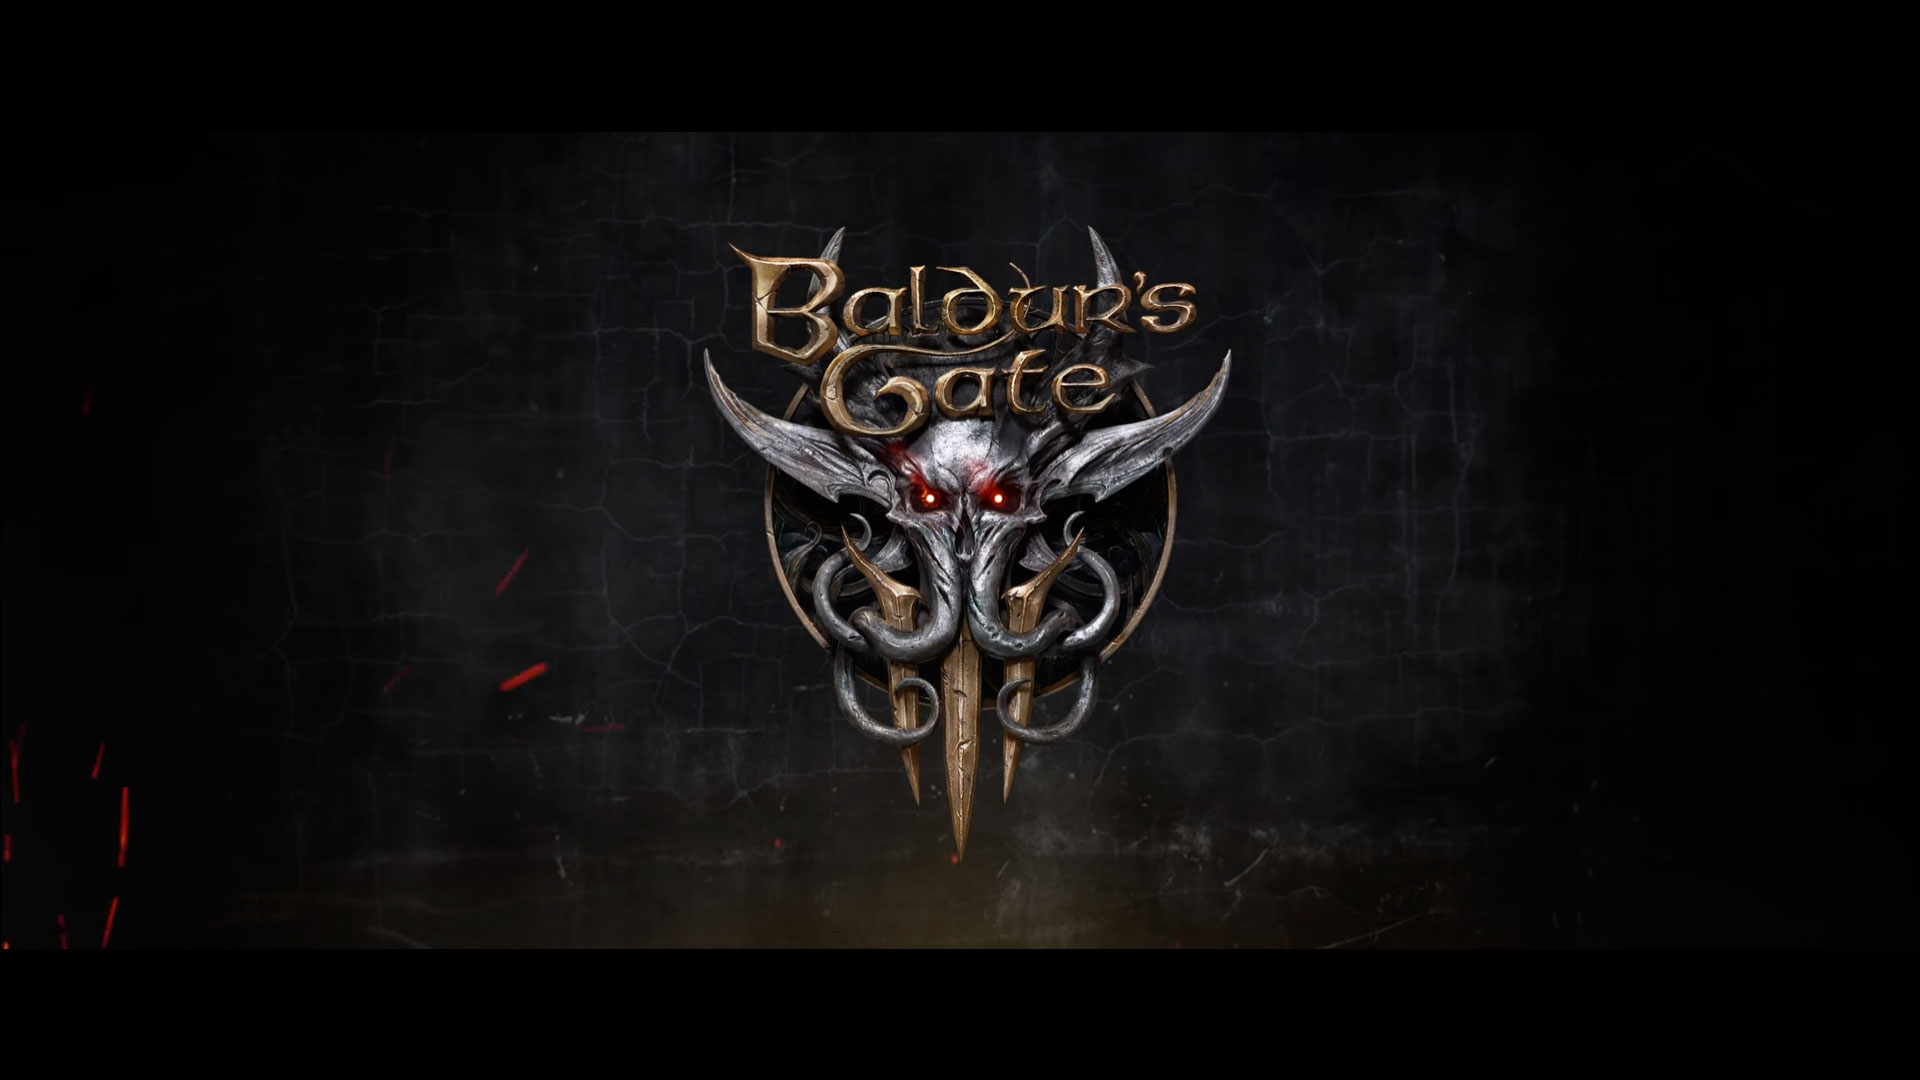 Baldur’s Gate III: annunciato ufficialmente